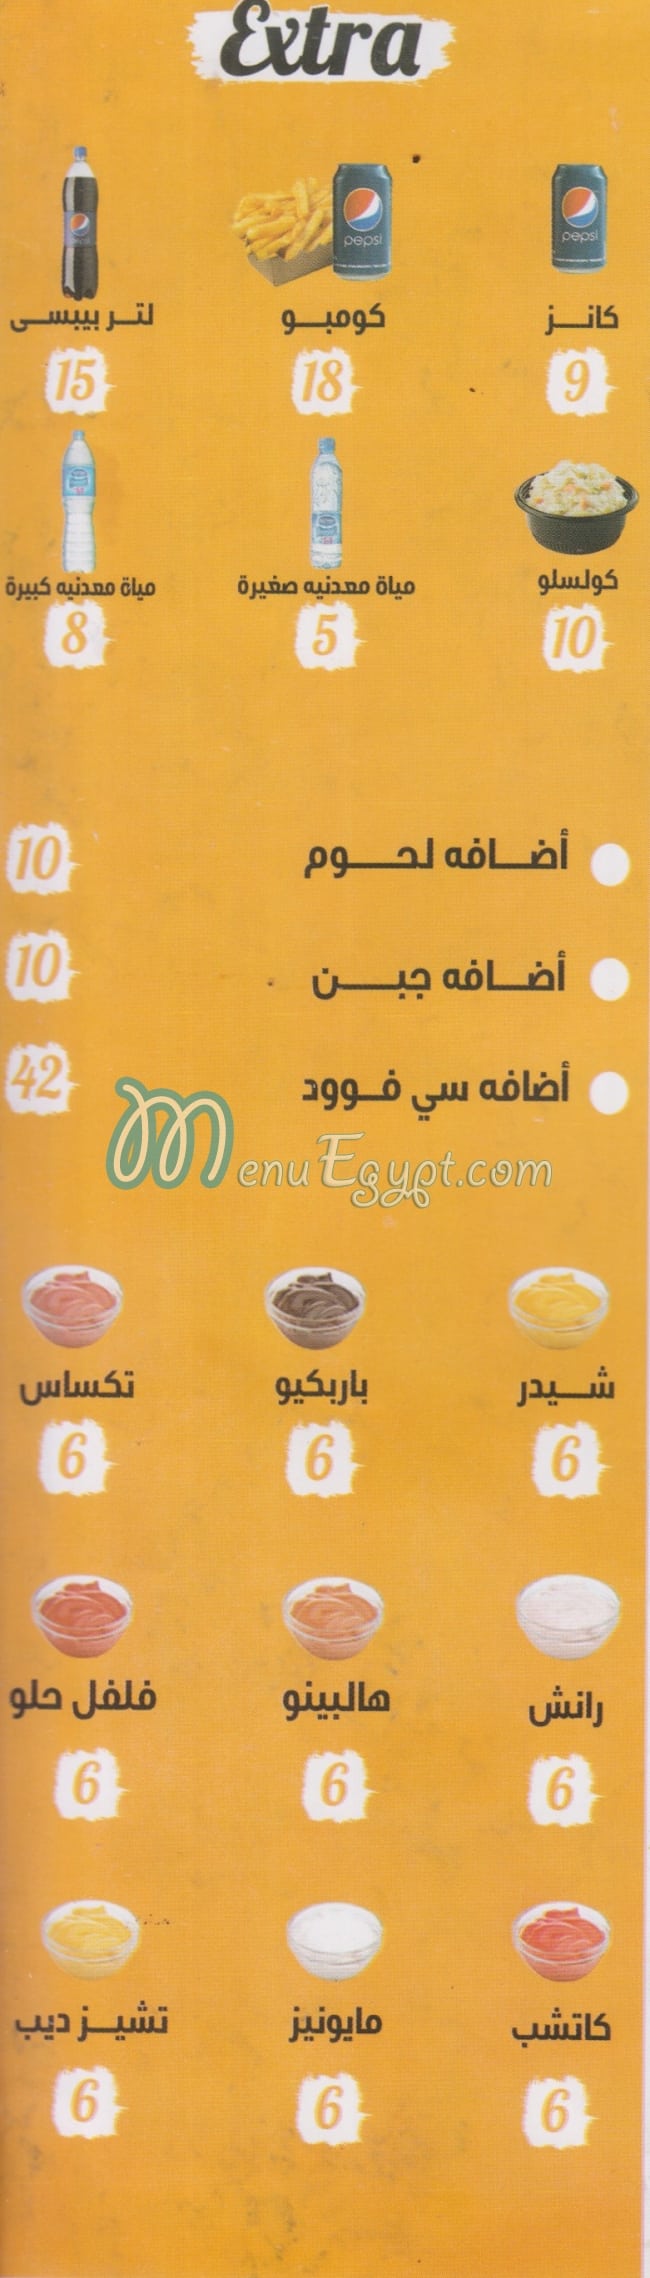 Trend Crepe menu Egypt 1